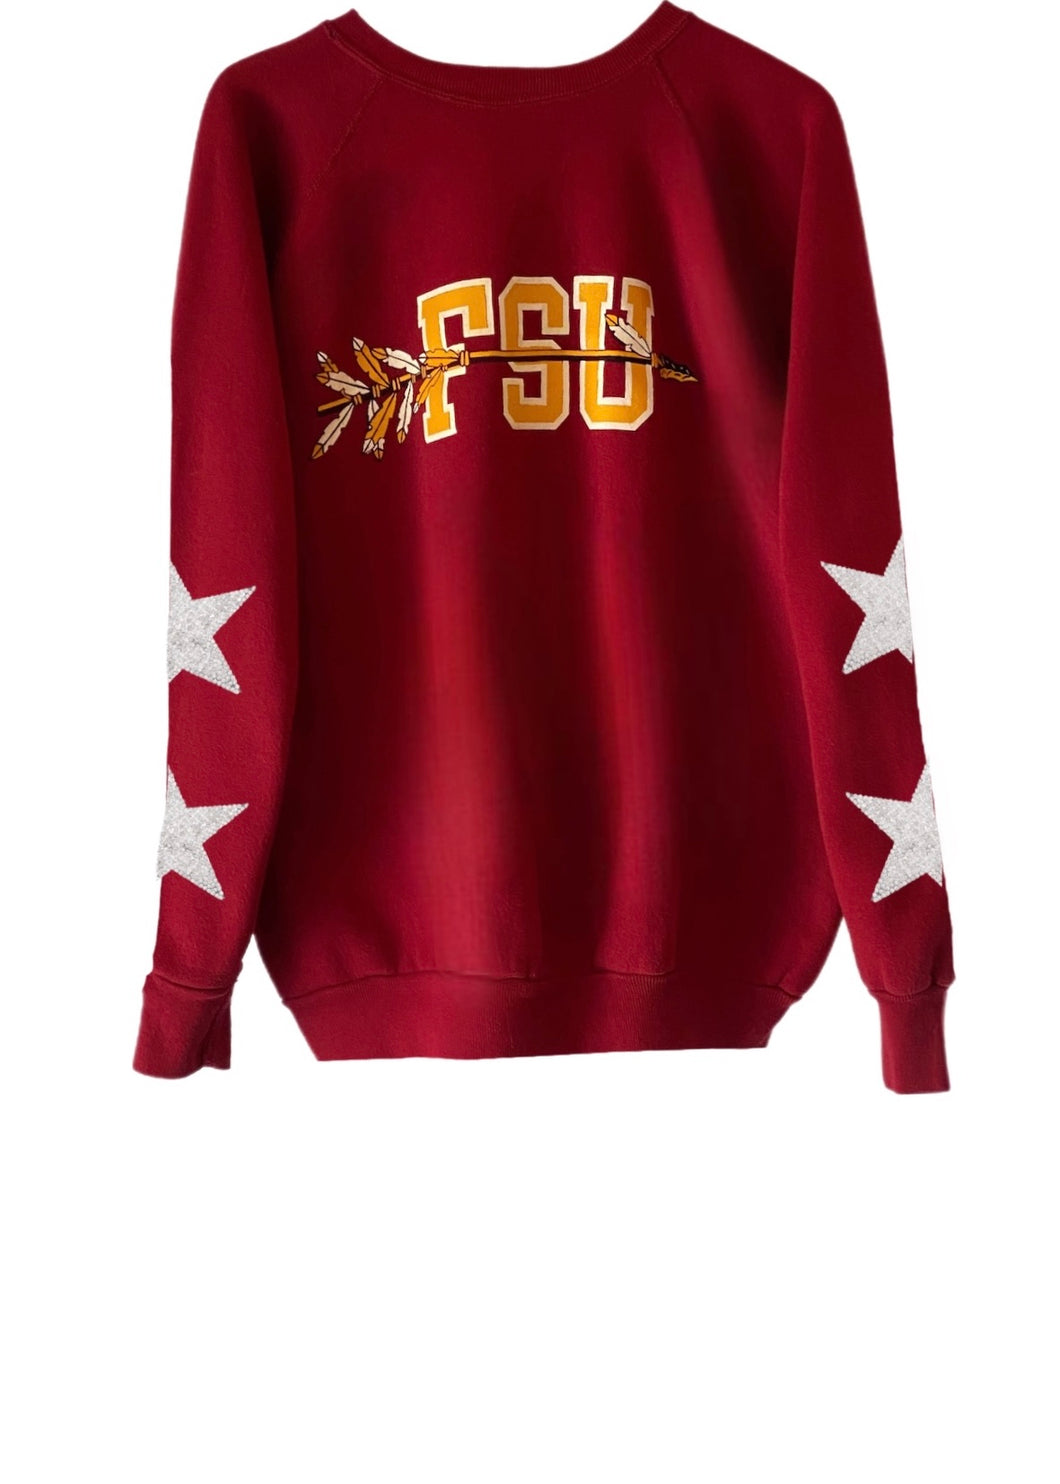 Florida State University, FSU One of a KIND Vintage Seminoles Sweatshirt with Crystal Star Design